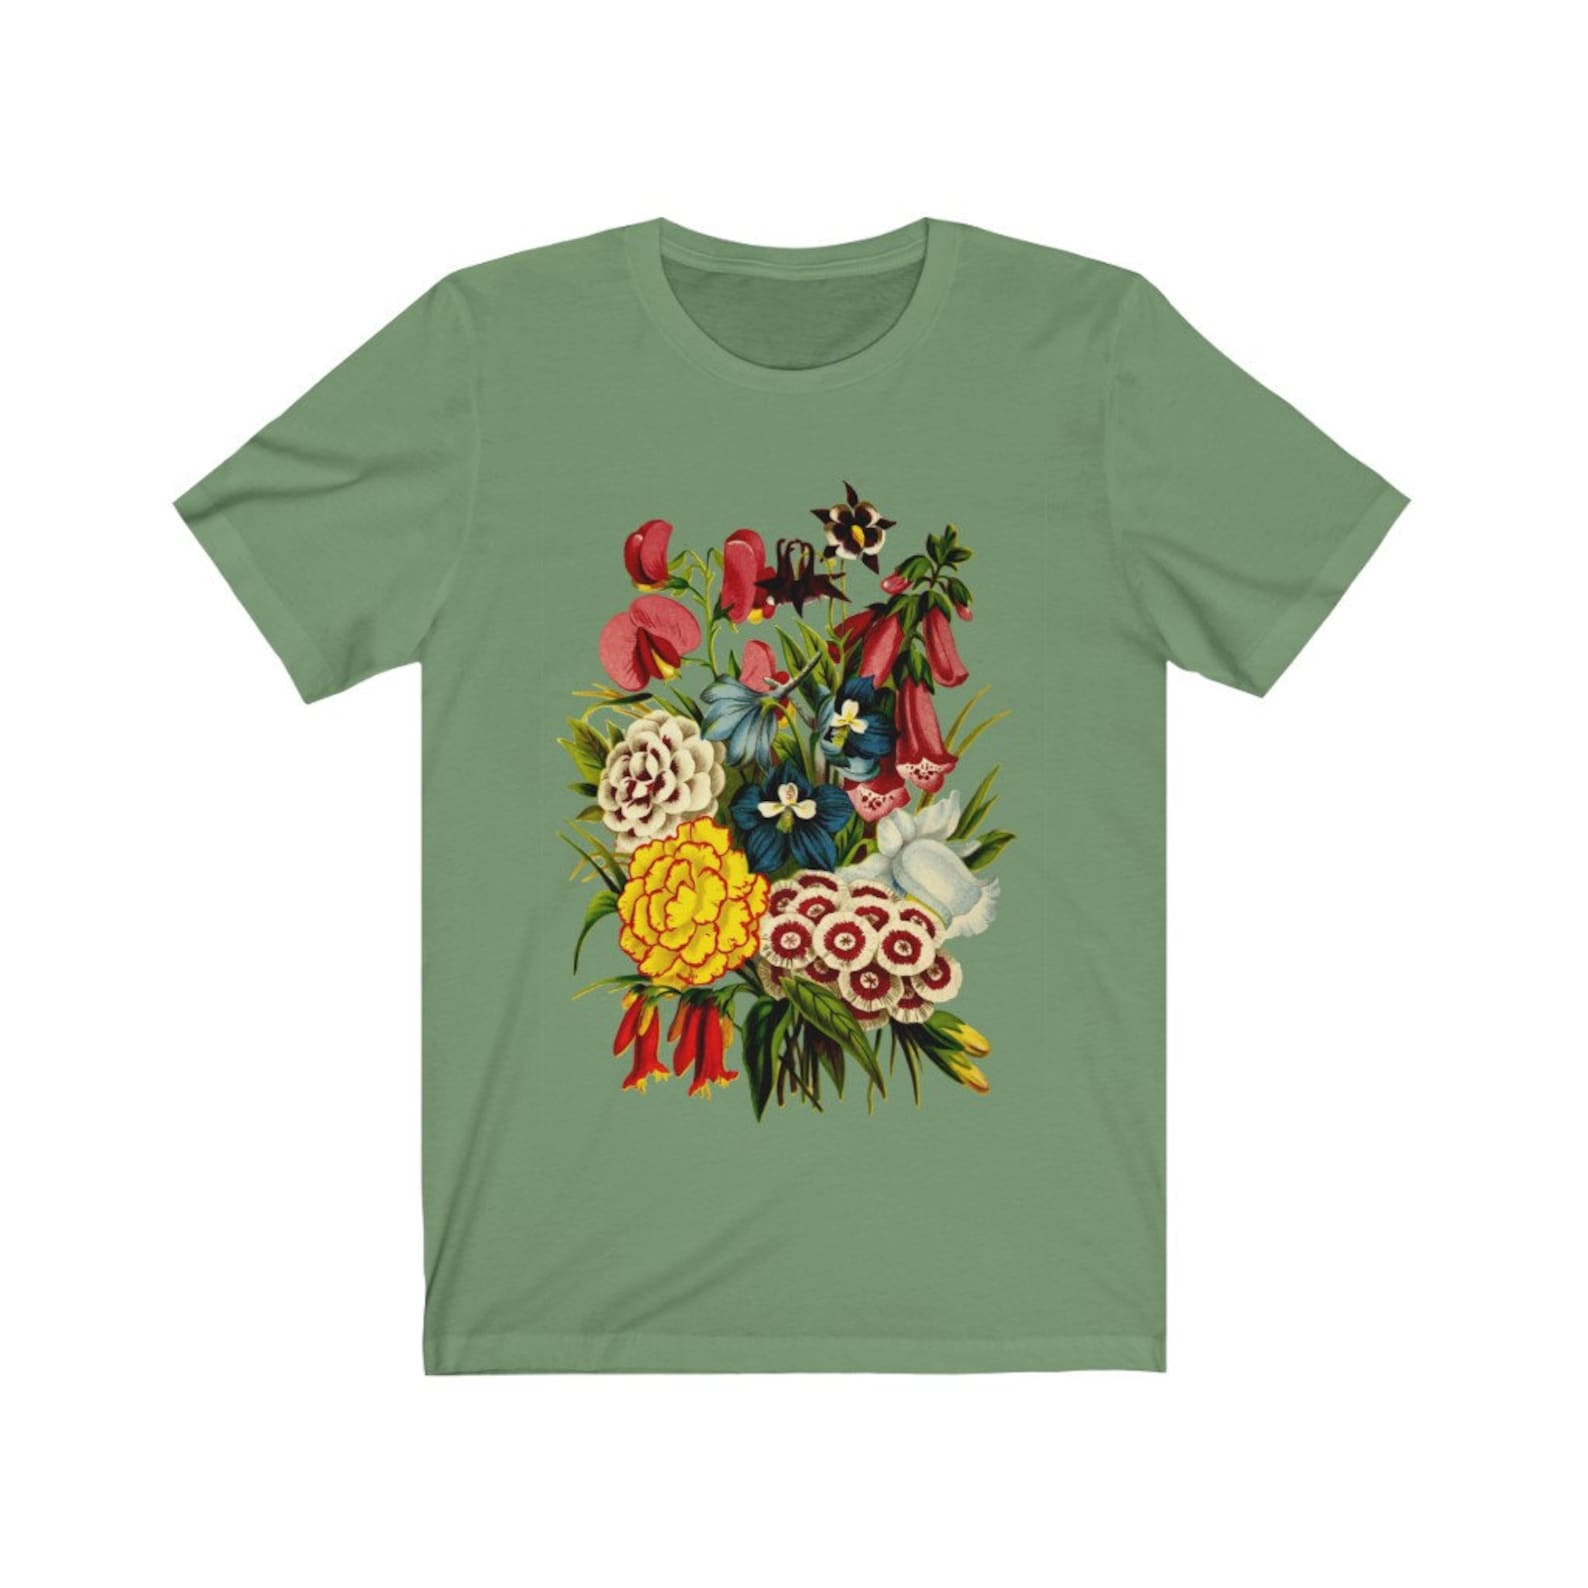 Botanical shirt cottage core t-shirt flower t-shirt tee | Etsy